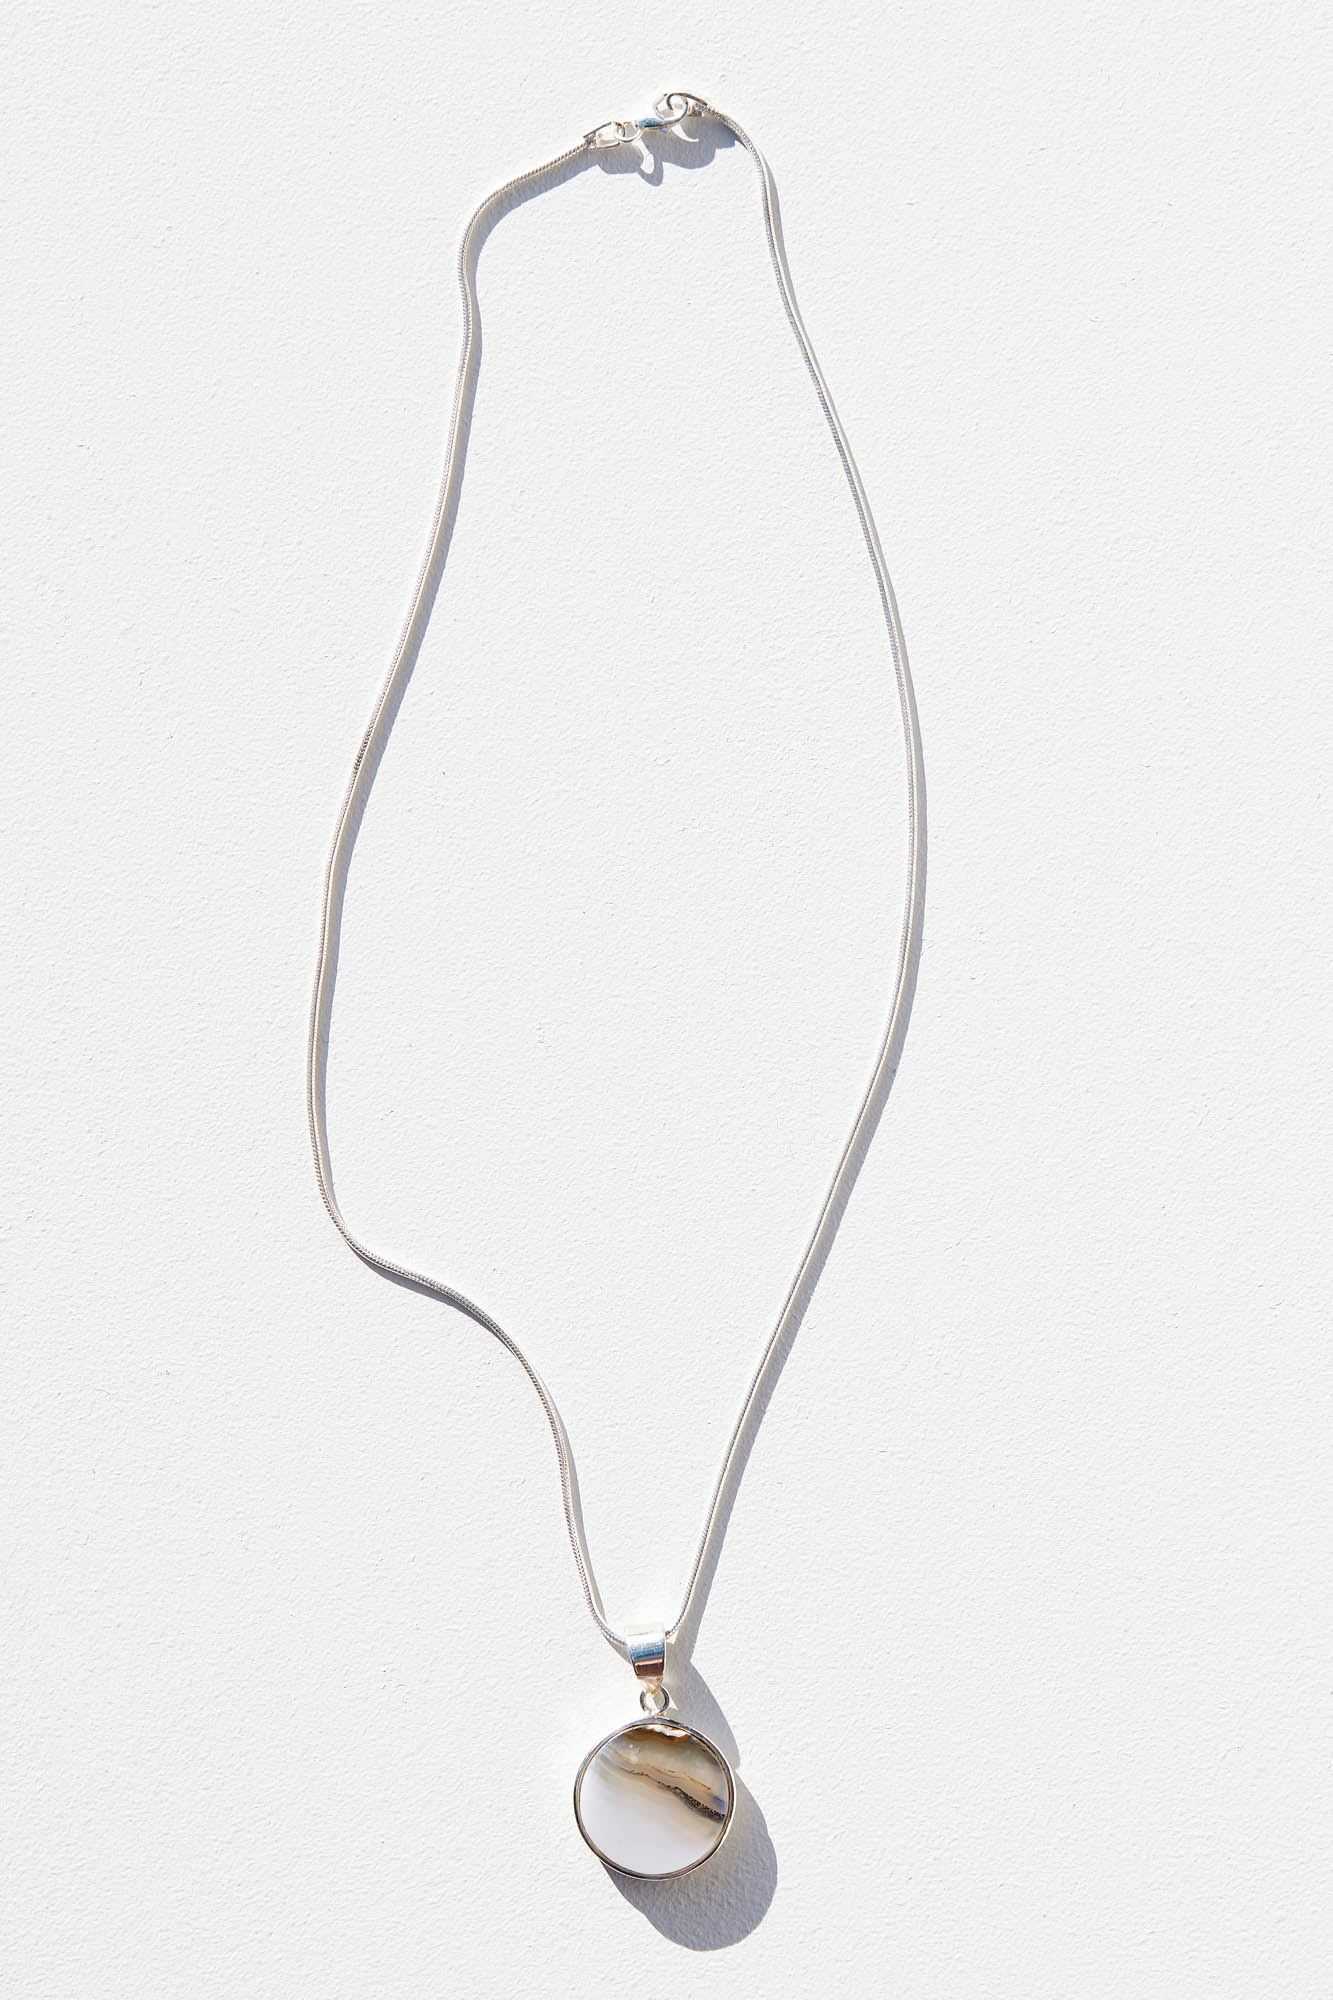 Agate Pendant Necklace